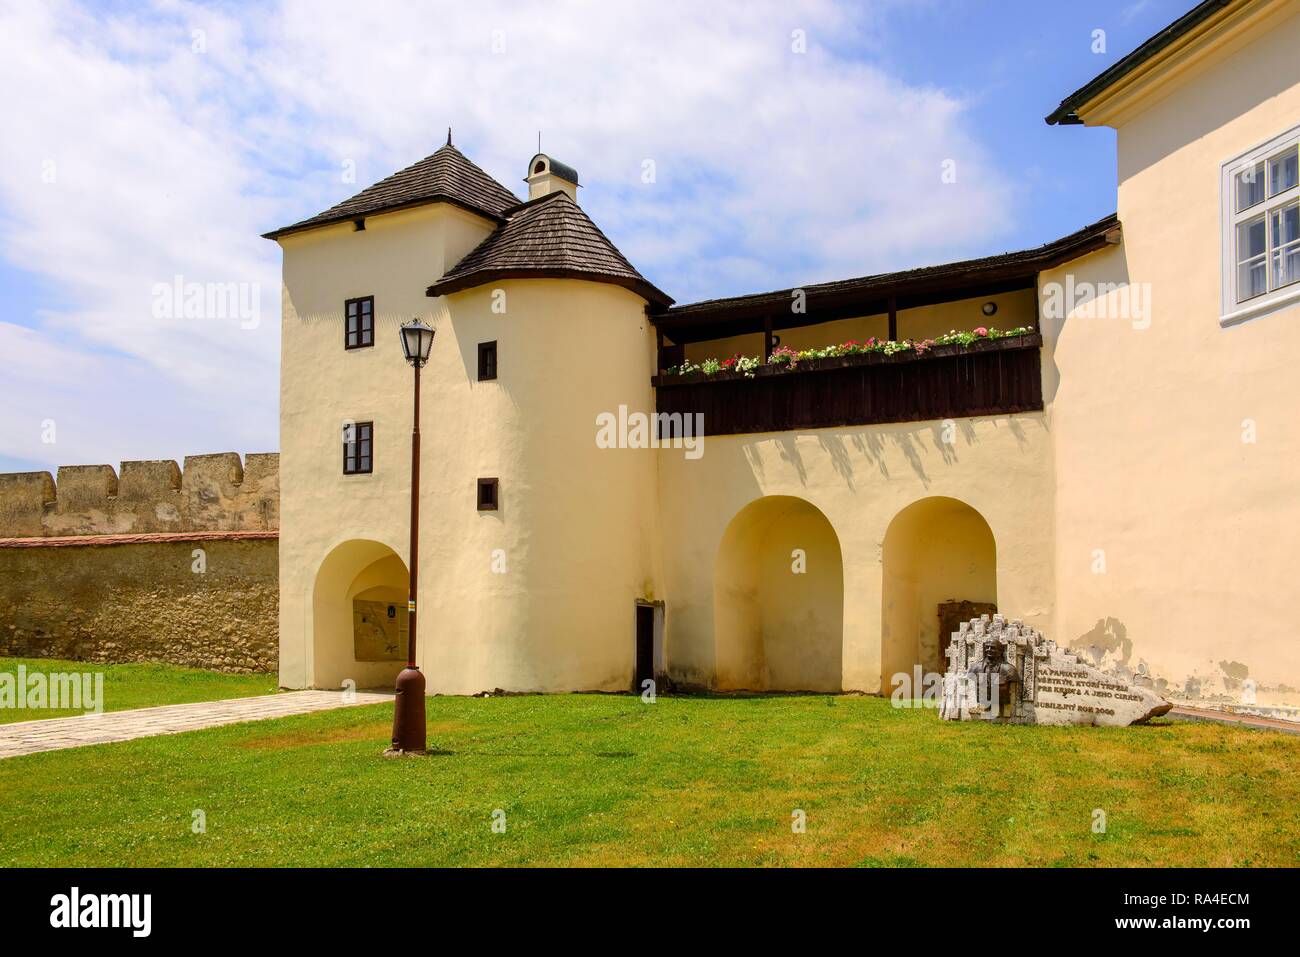 Gate to the church castle, Spisska Kapitula, Spisske Potharadie, Kirchdrauf, Zips, Slovakia Stock Photo